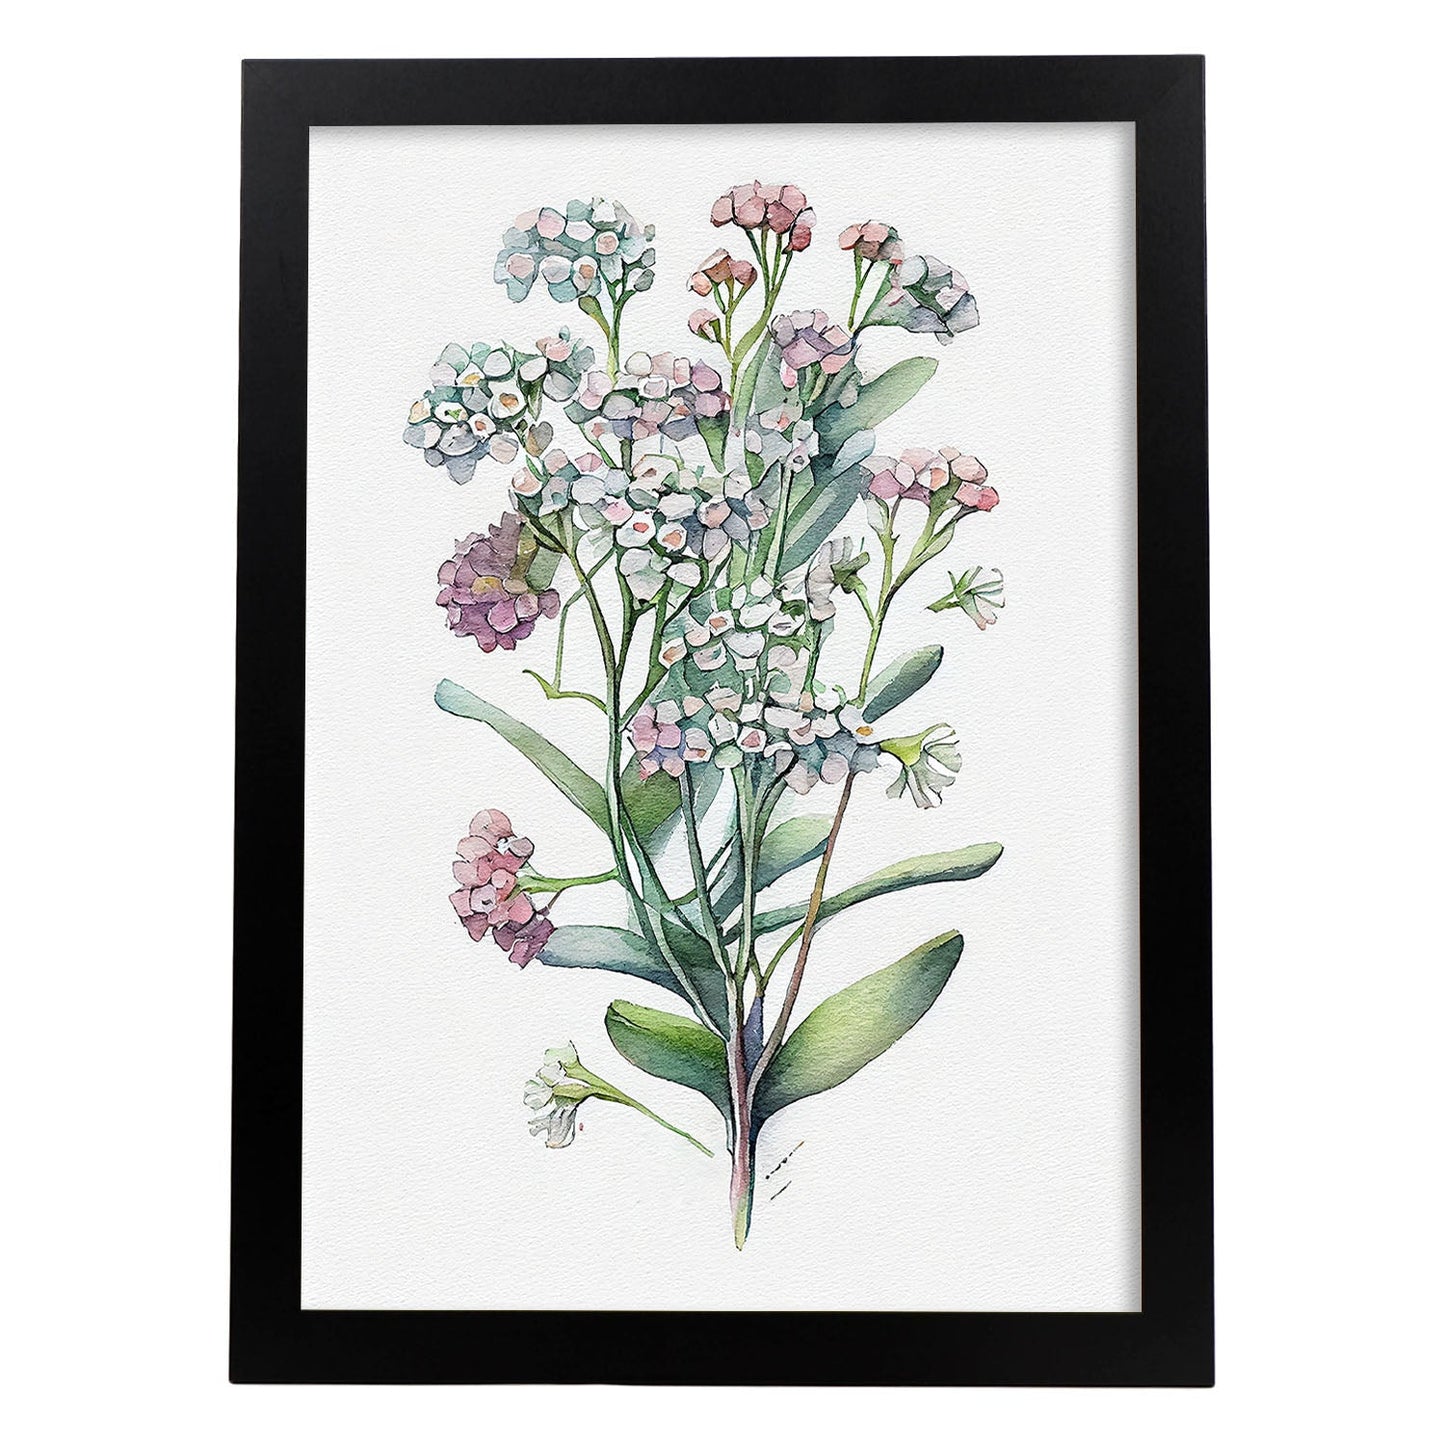 Nacnic watercolor minmal Sweet Alyssum. Aesthetic Wall Art Prints for Bedroom or Living Room Design.